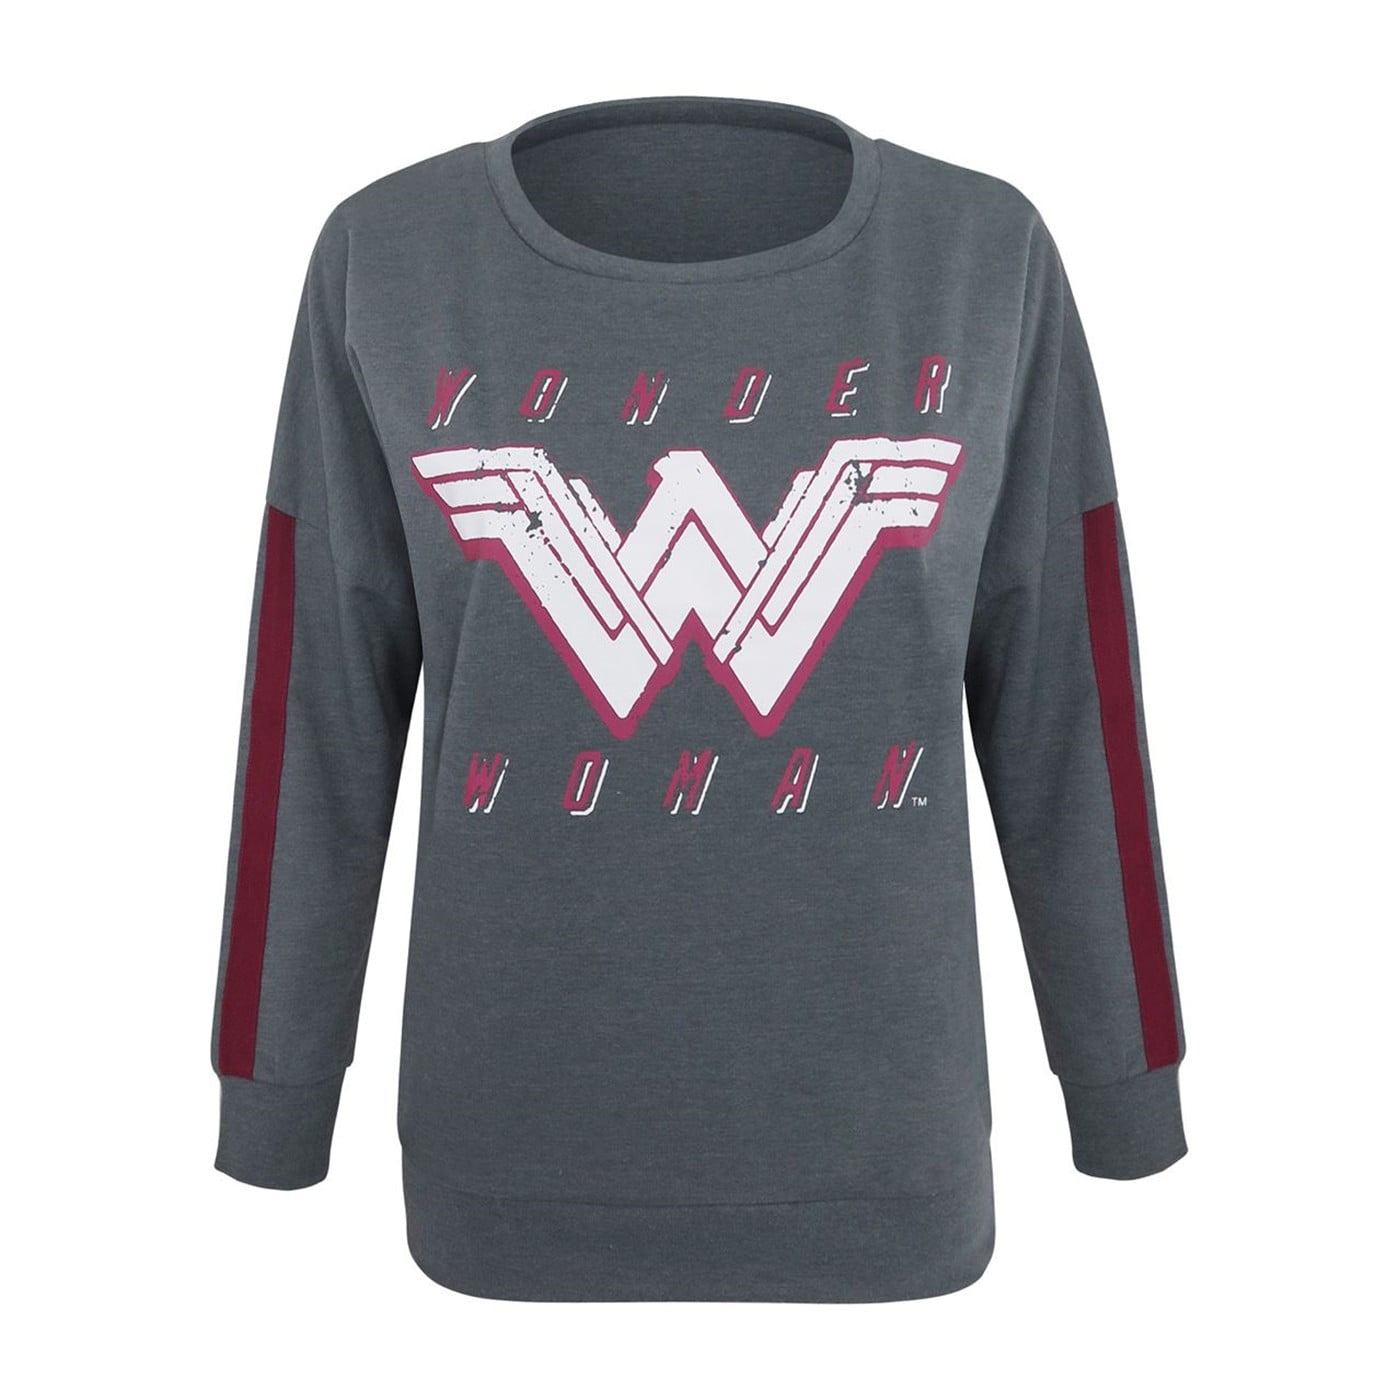 Details about   Wonder Woman Dye Heather Women's Sweatshirt Heather Charcoal